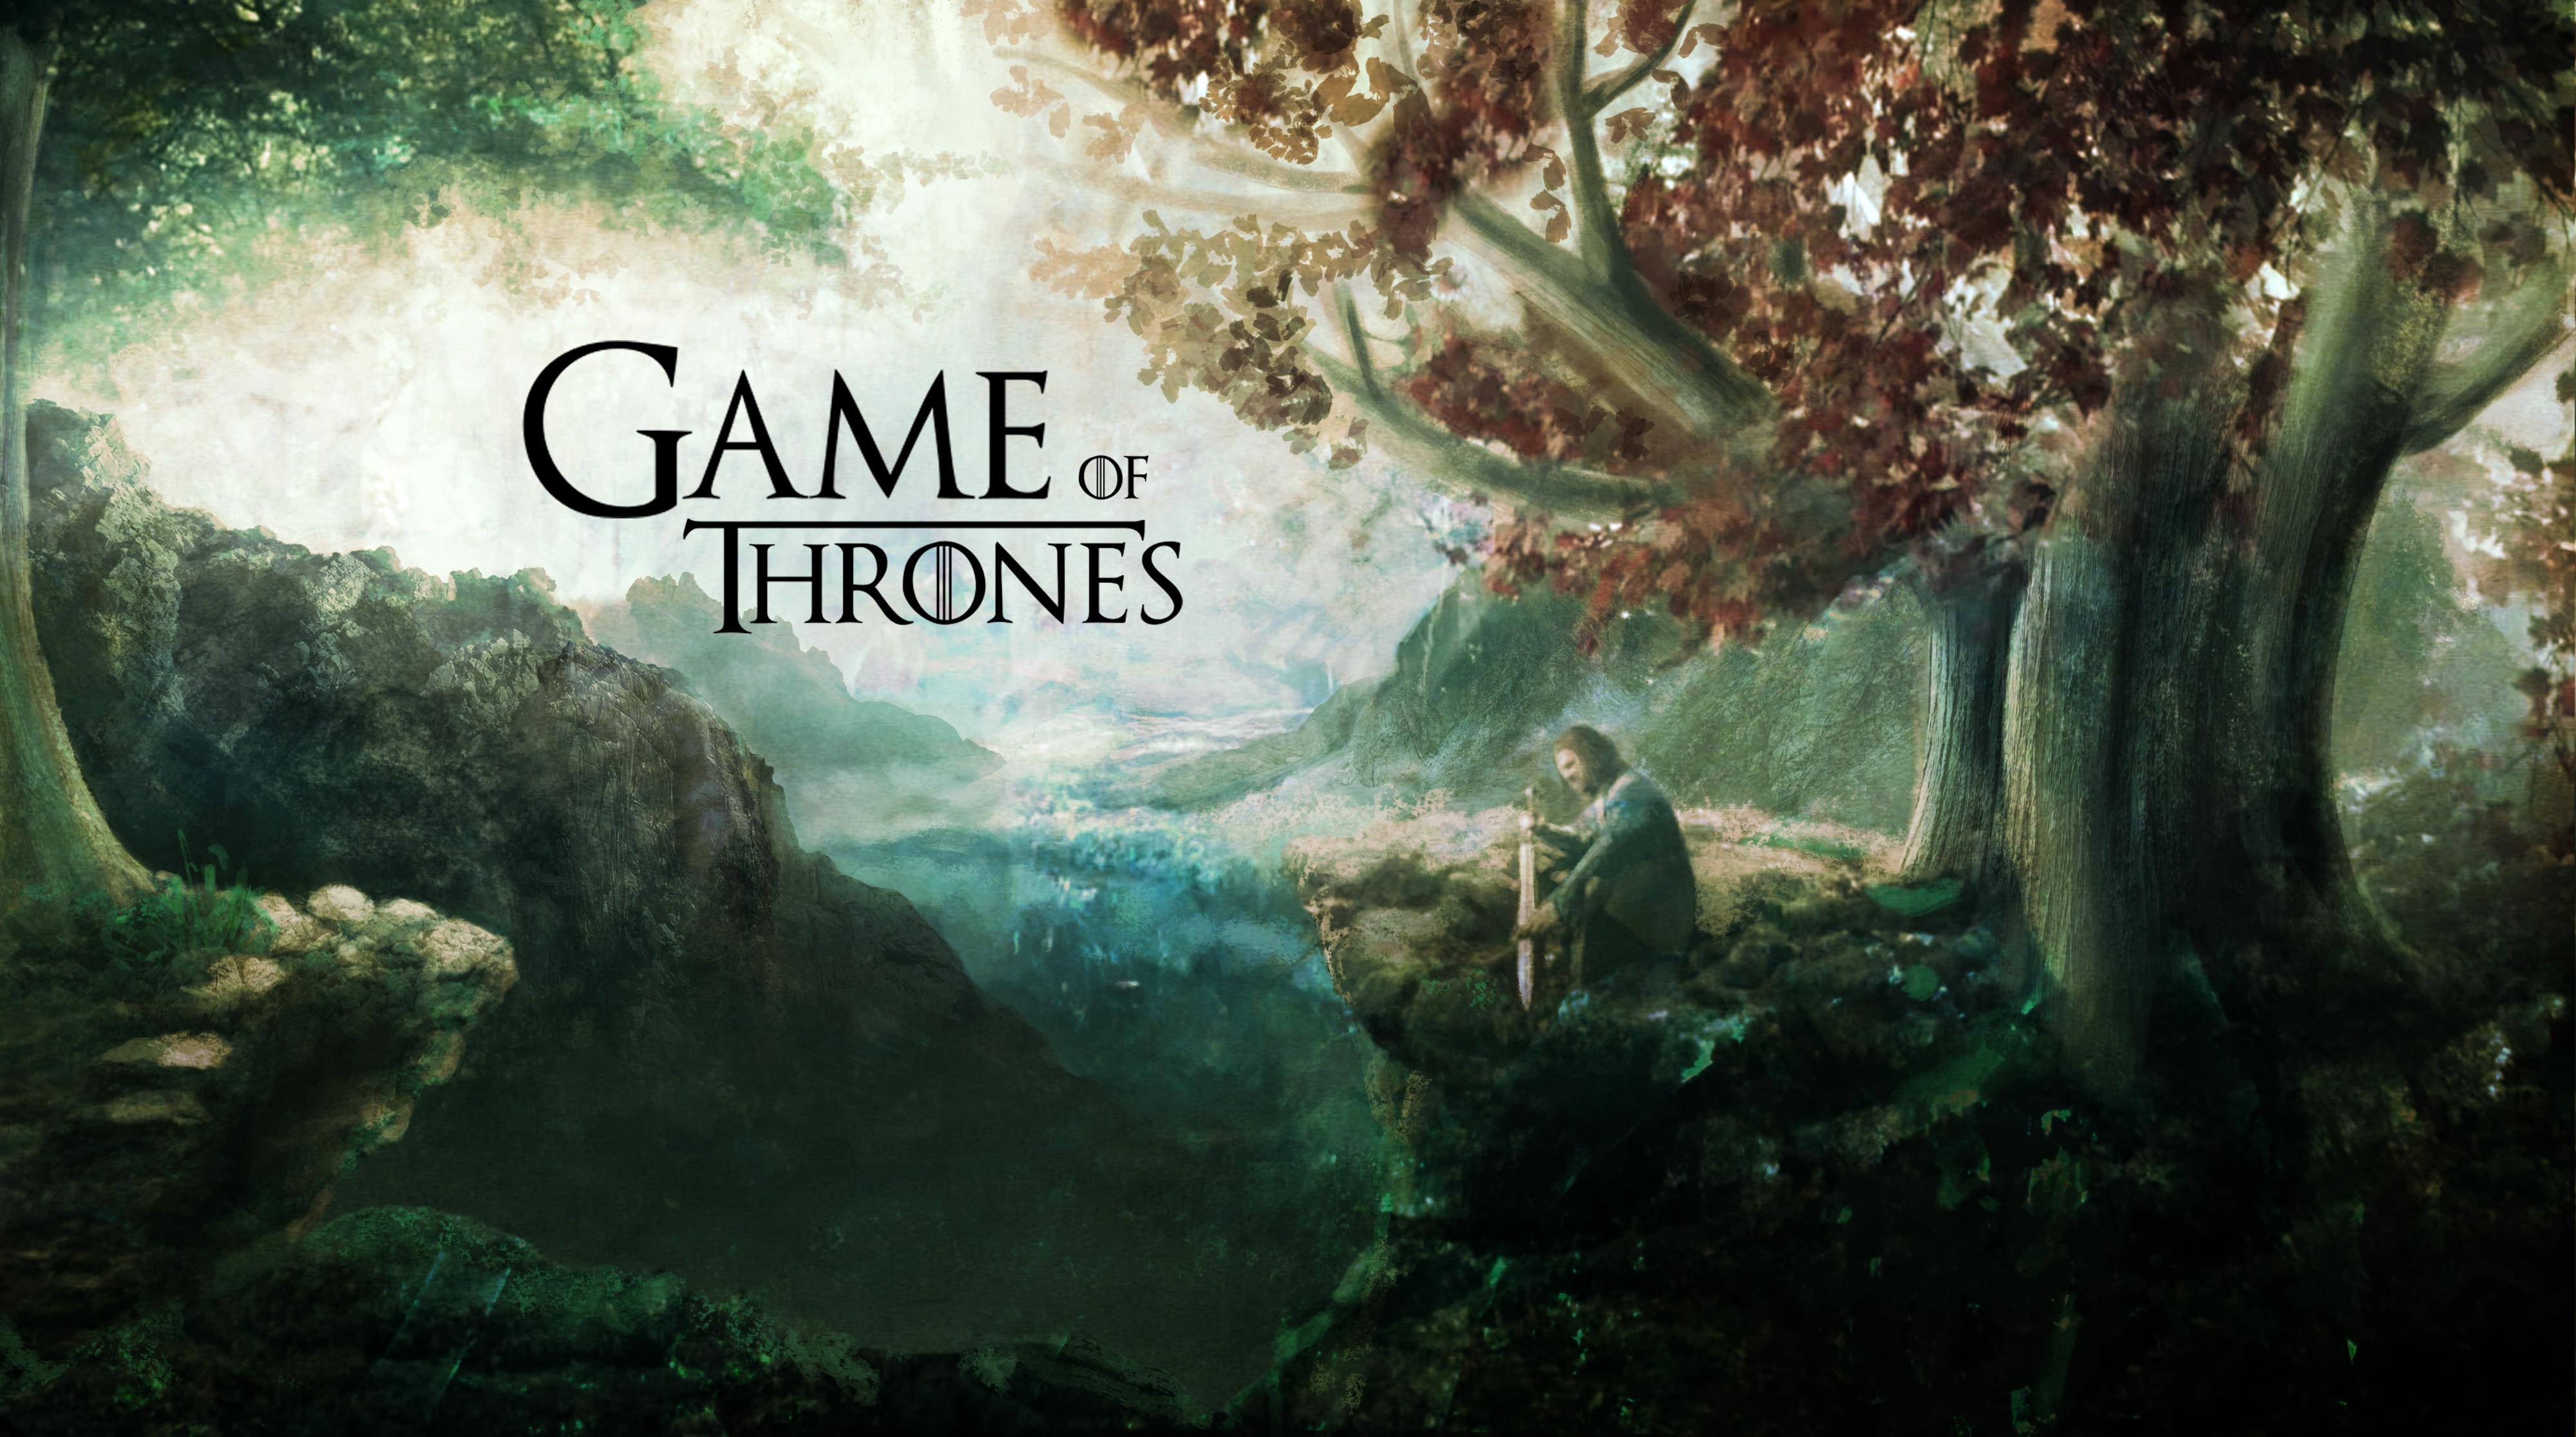 Wallpaper Game of Thrones, HD, 4K, TV Series